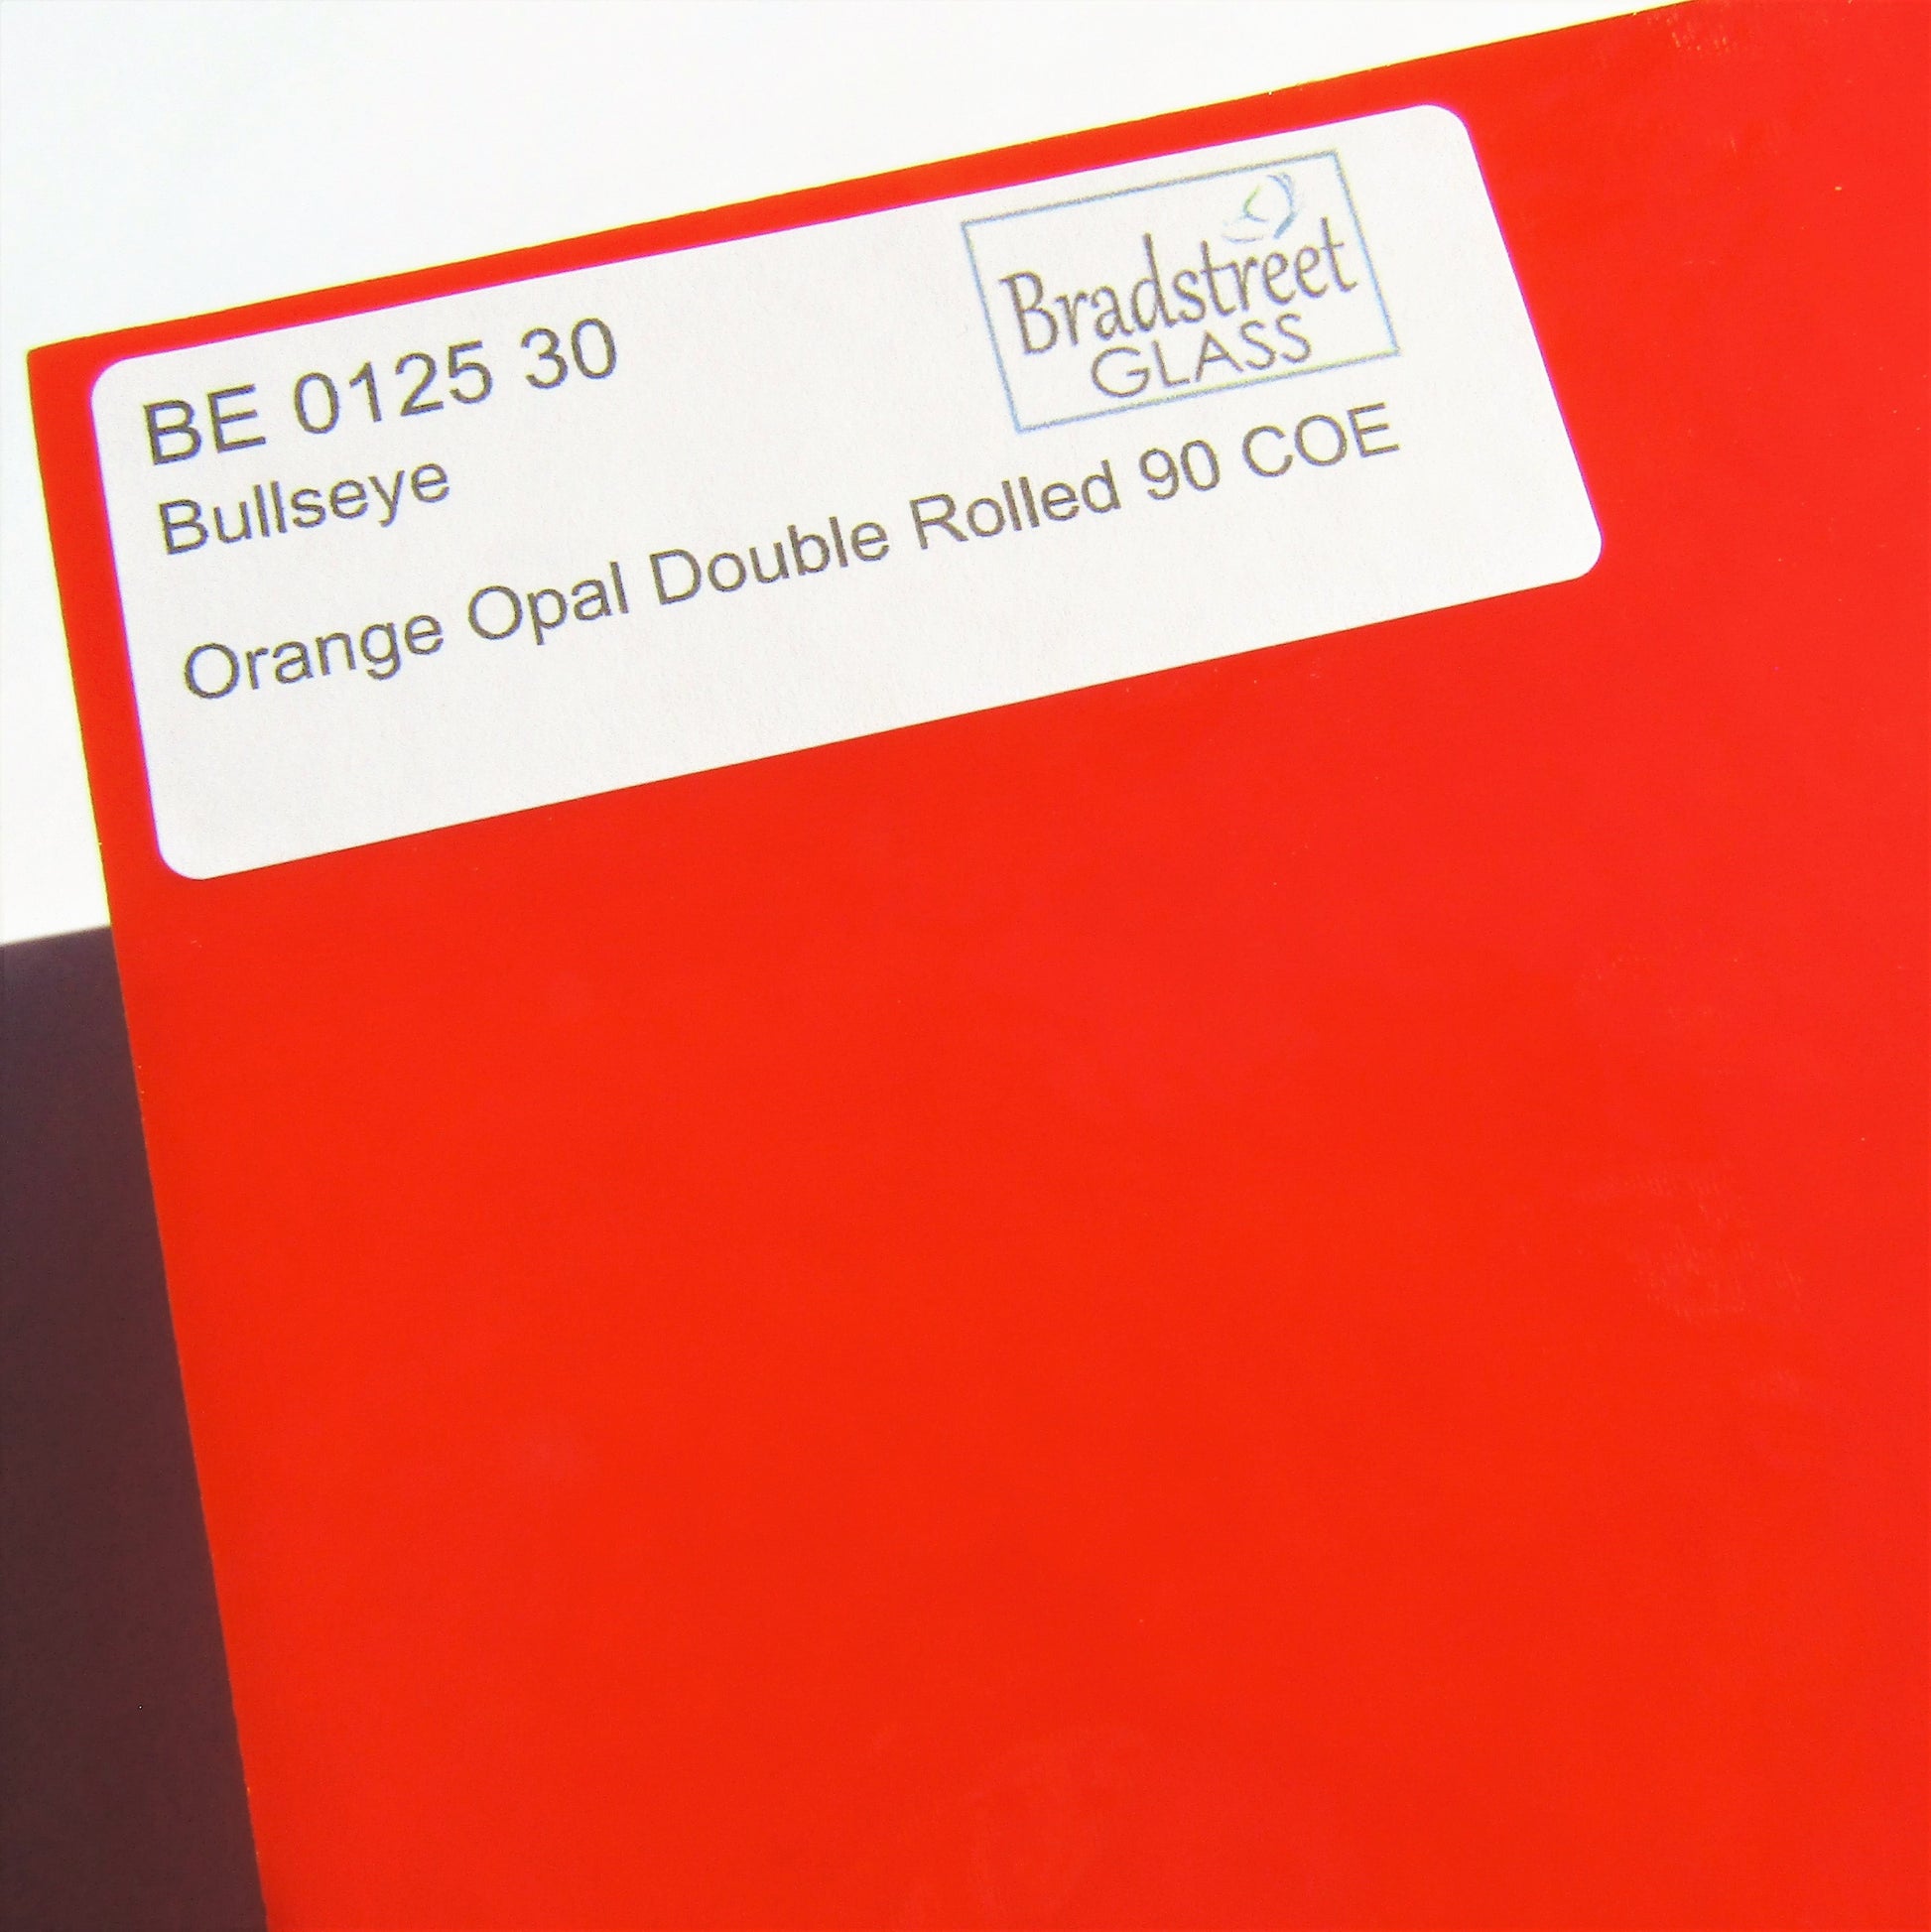 Orange Opal Stained Glass Sheet Opaque Double Roll 90 COE Bullseye 0125 30F